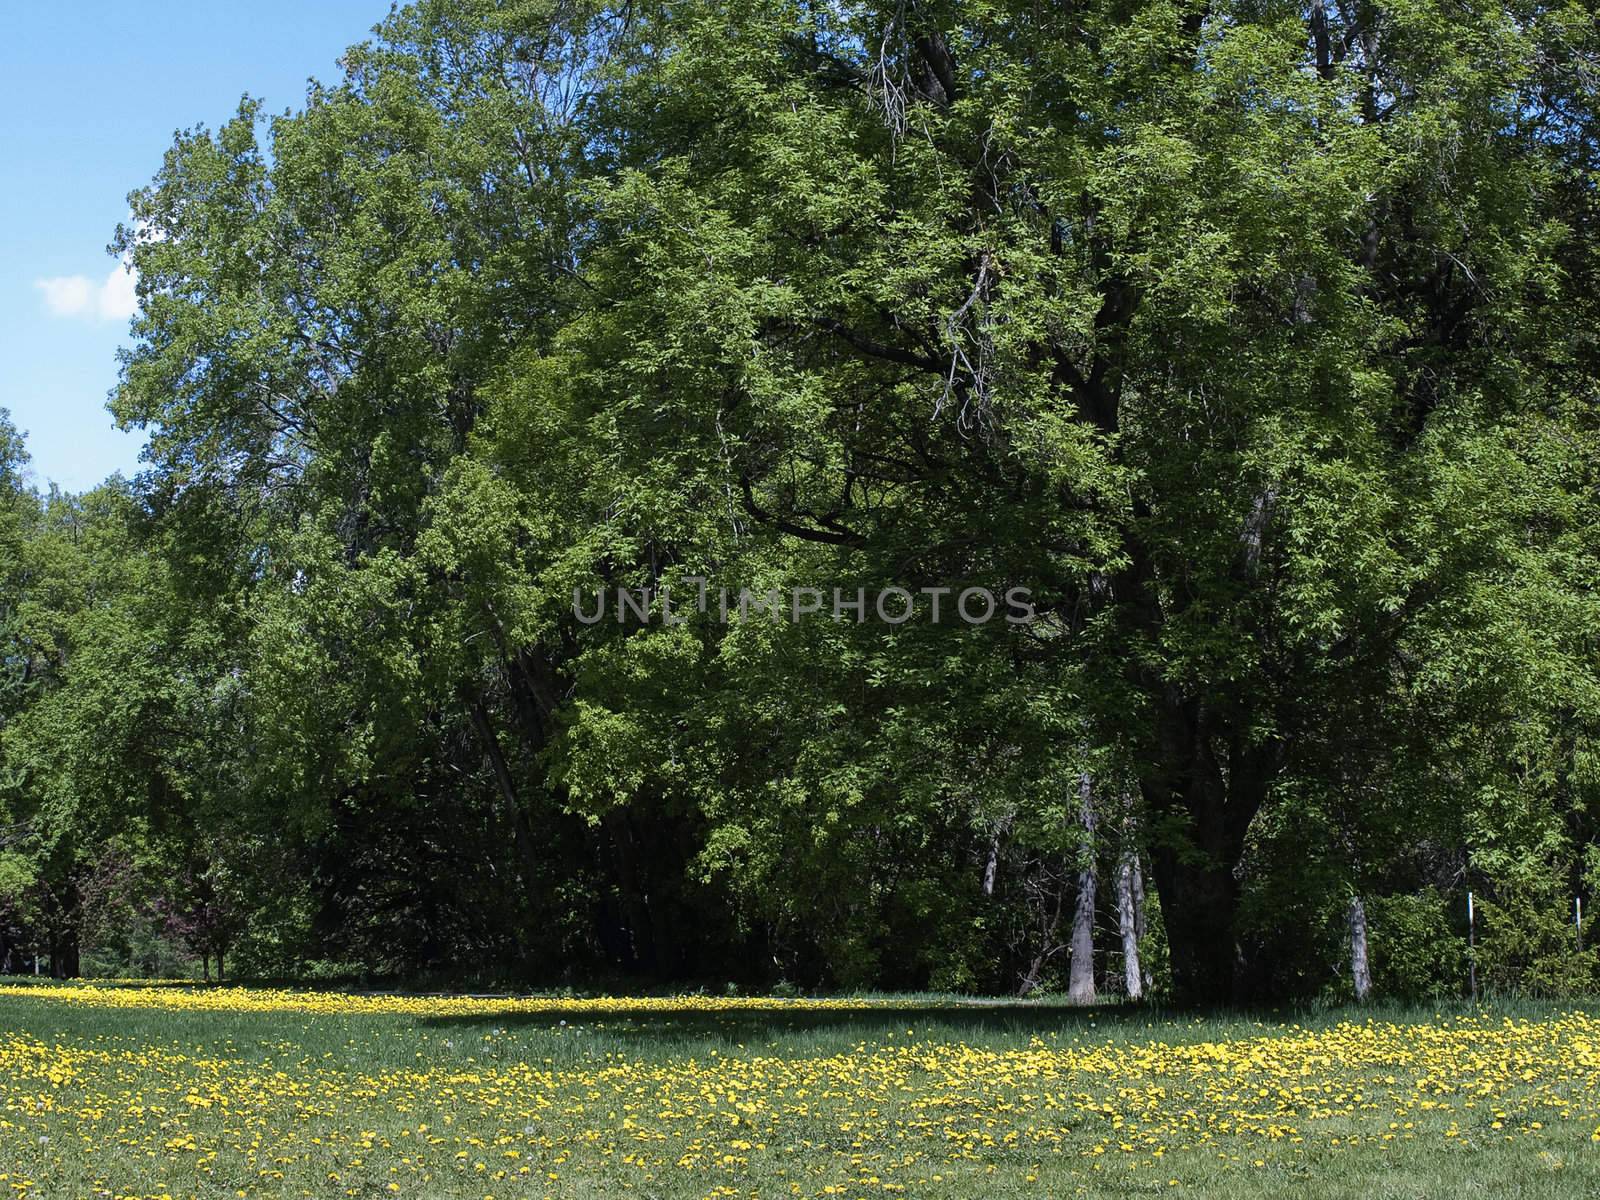 A fresh field of Dandelions in a city park.